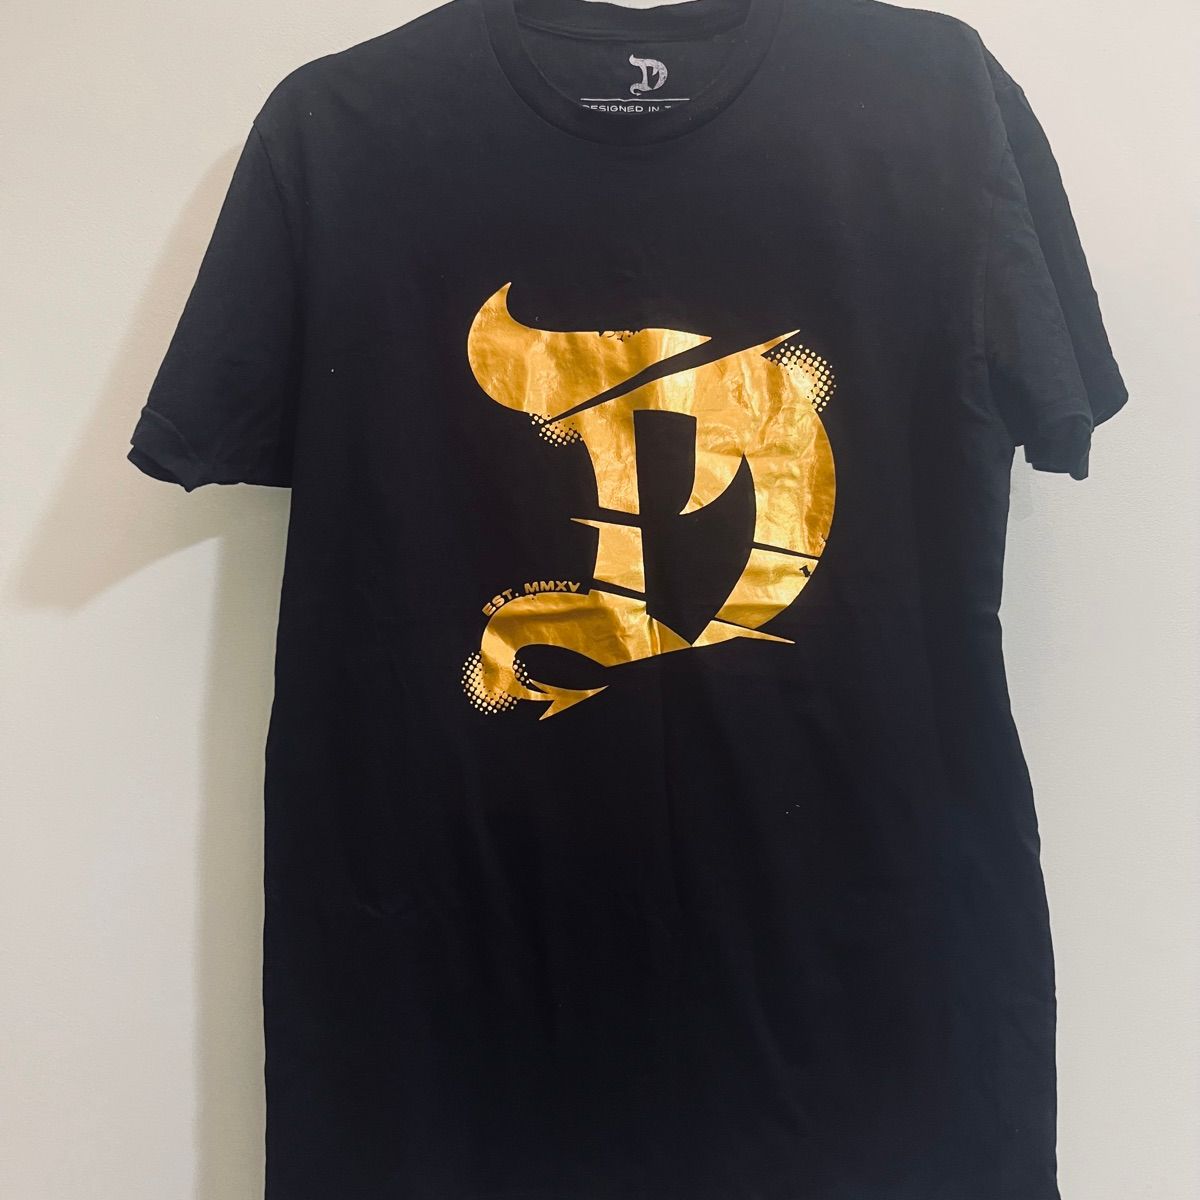 Camiseta Dragon - Comprar em Menino Vendas Multimarcas